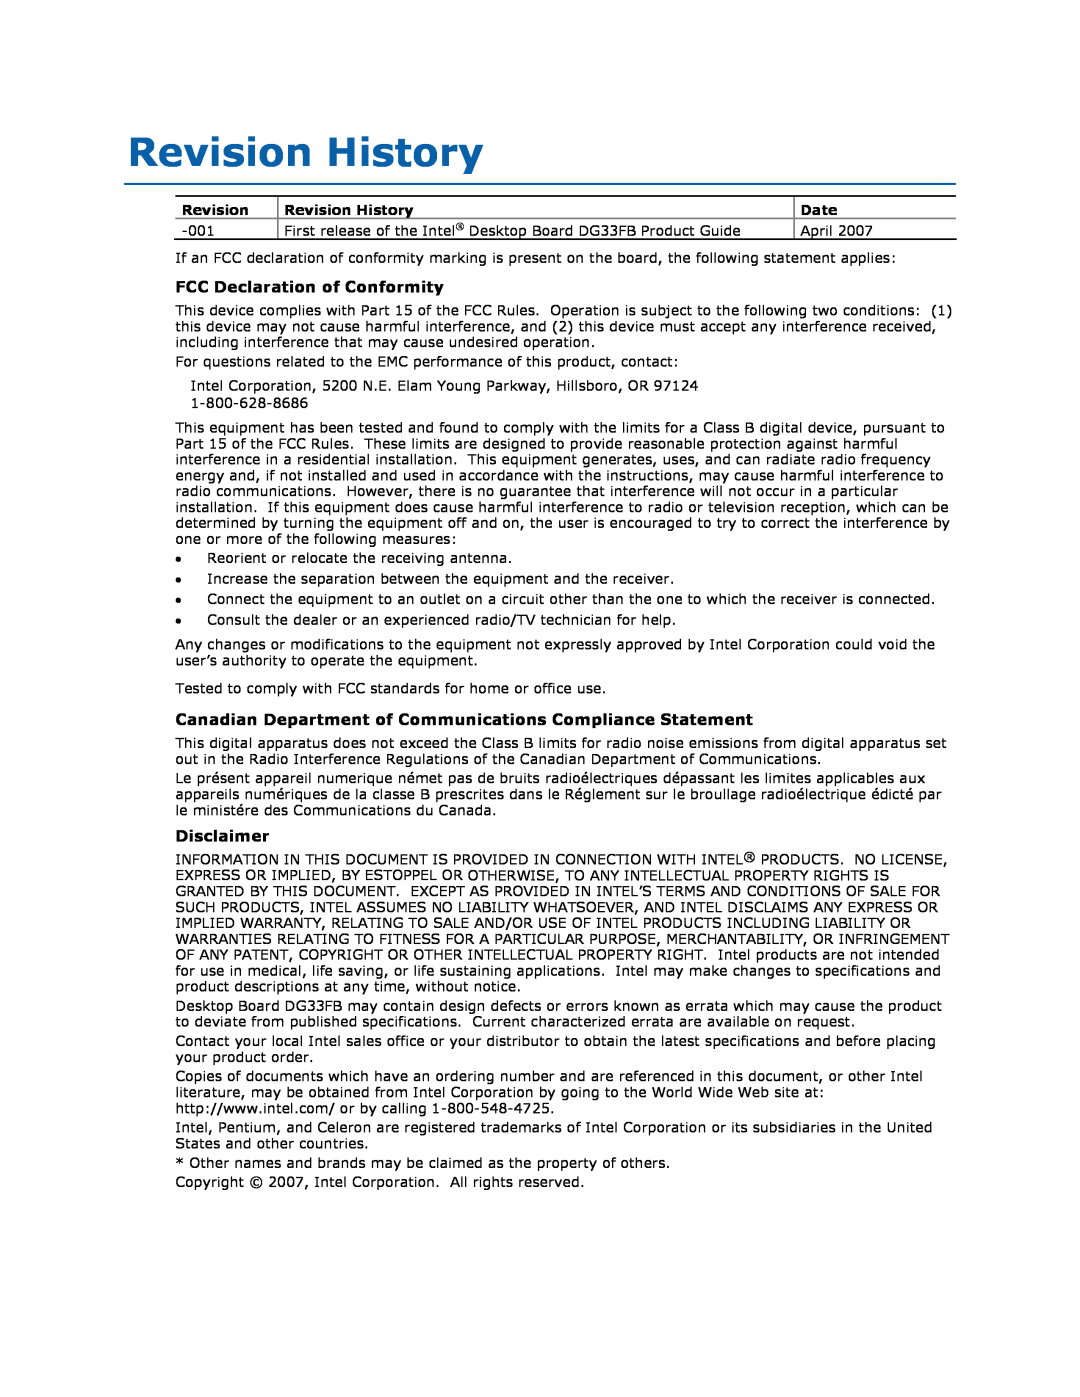 Intel DG33FB manual Revision History, FCC Declaration of Conformity, Disclaimer, Date 